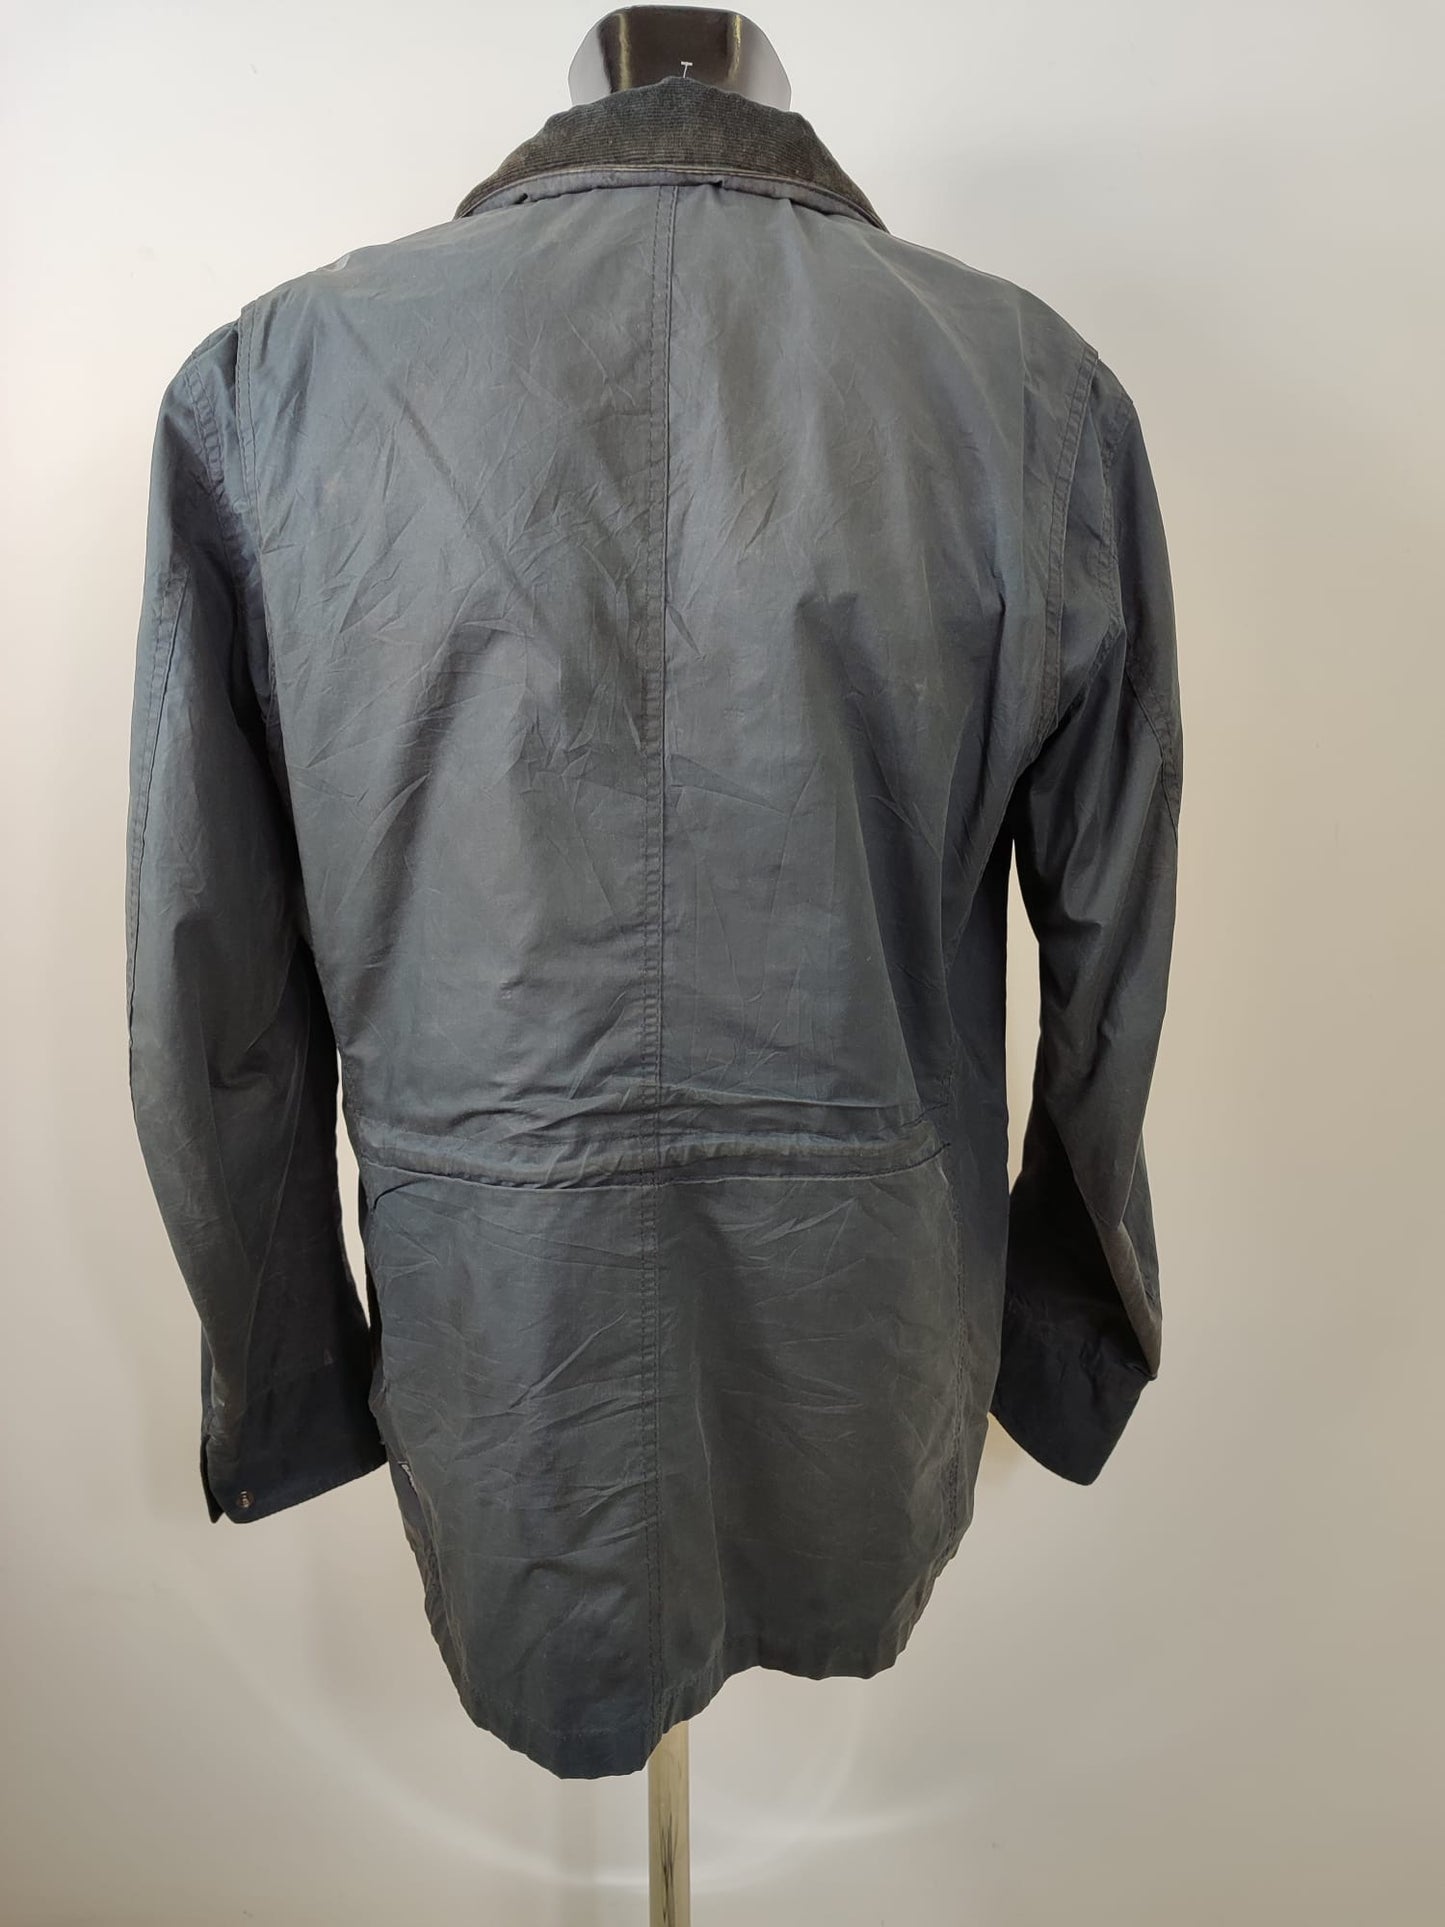 Giacca da uomo blu Tailored Sapper cerato taglia XL - Man Navy wax Sapper jacket size XL